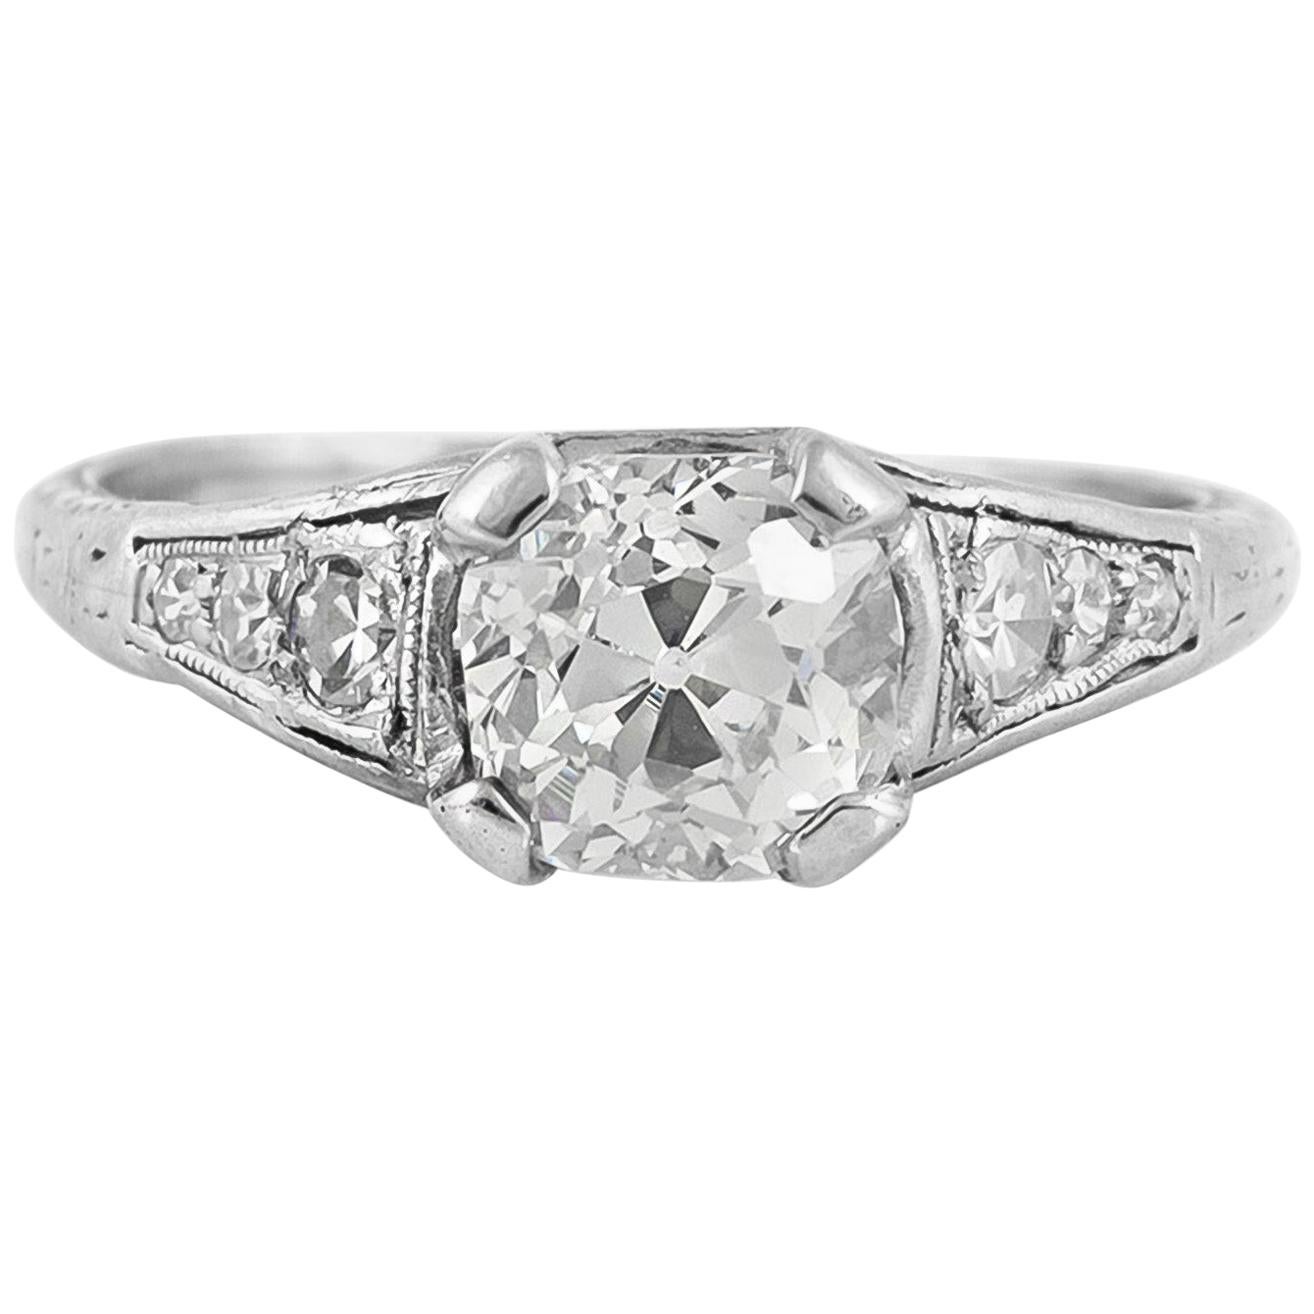 1920s-1930s Filigree with 1.80 Round Diamond Engagement Ring